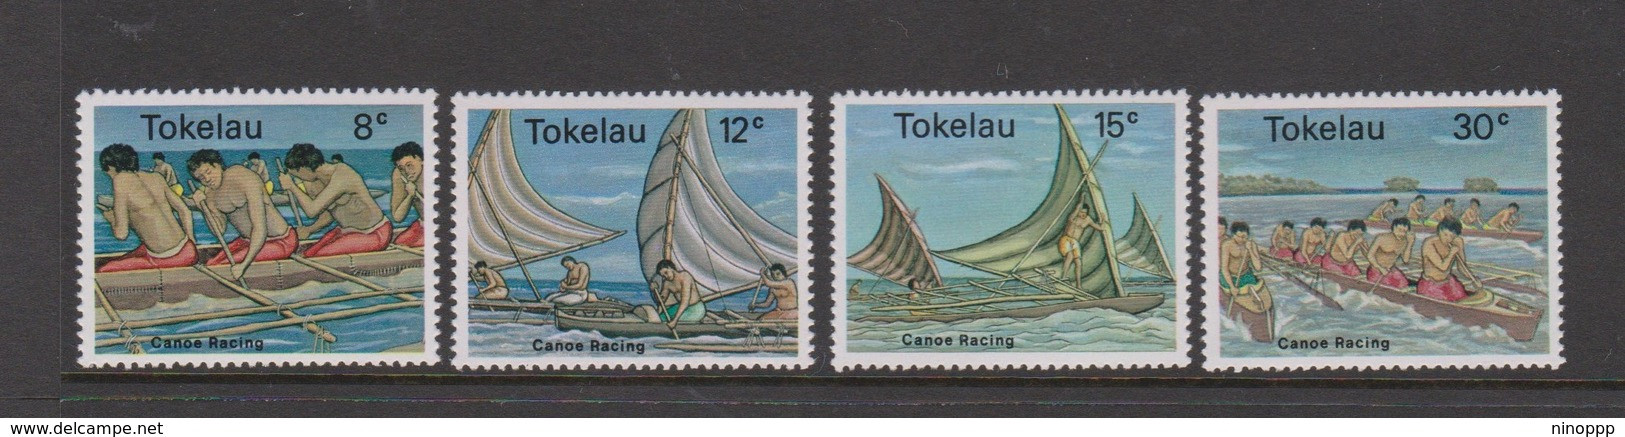 Tokelau SG 65-68 1978 Canoe Racing,mint Never Hinged - Tokelau